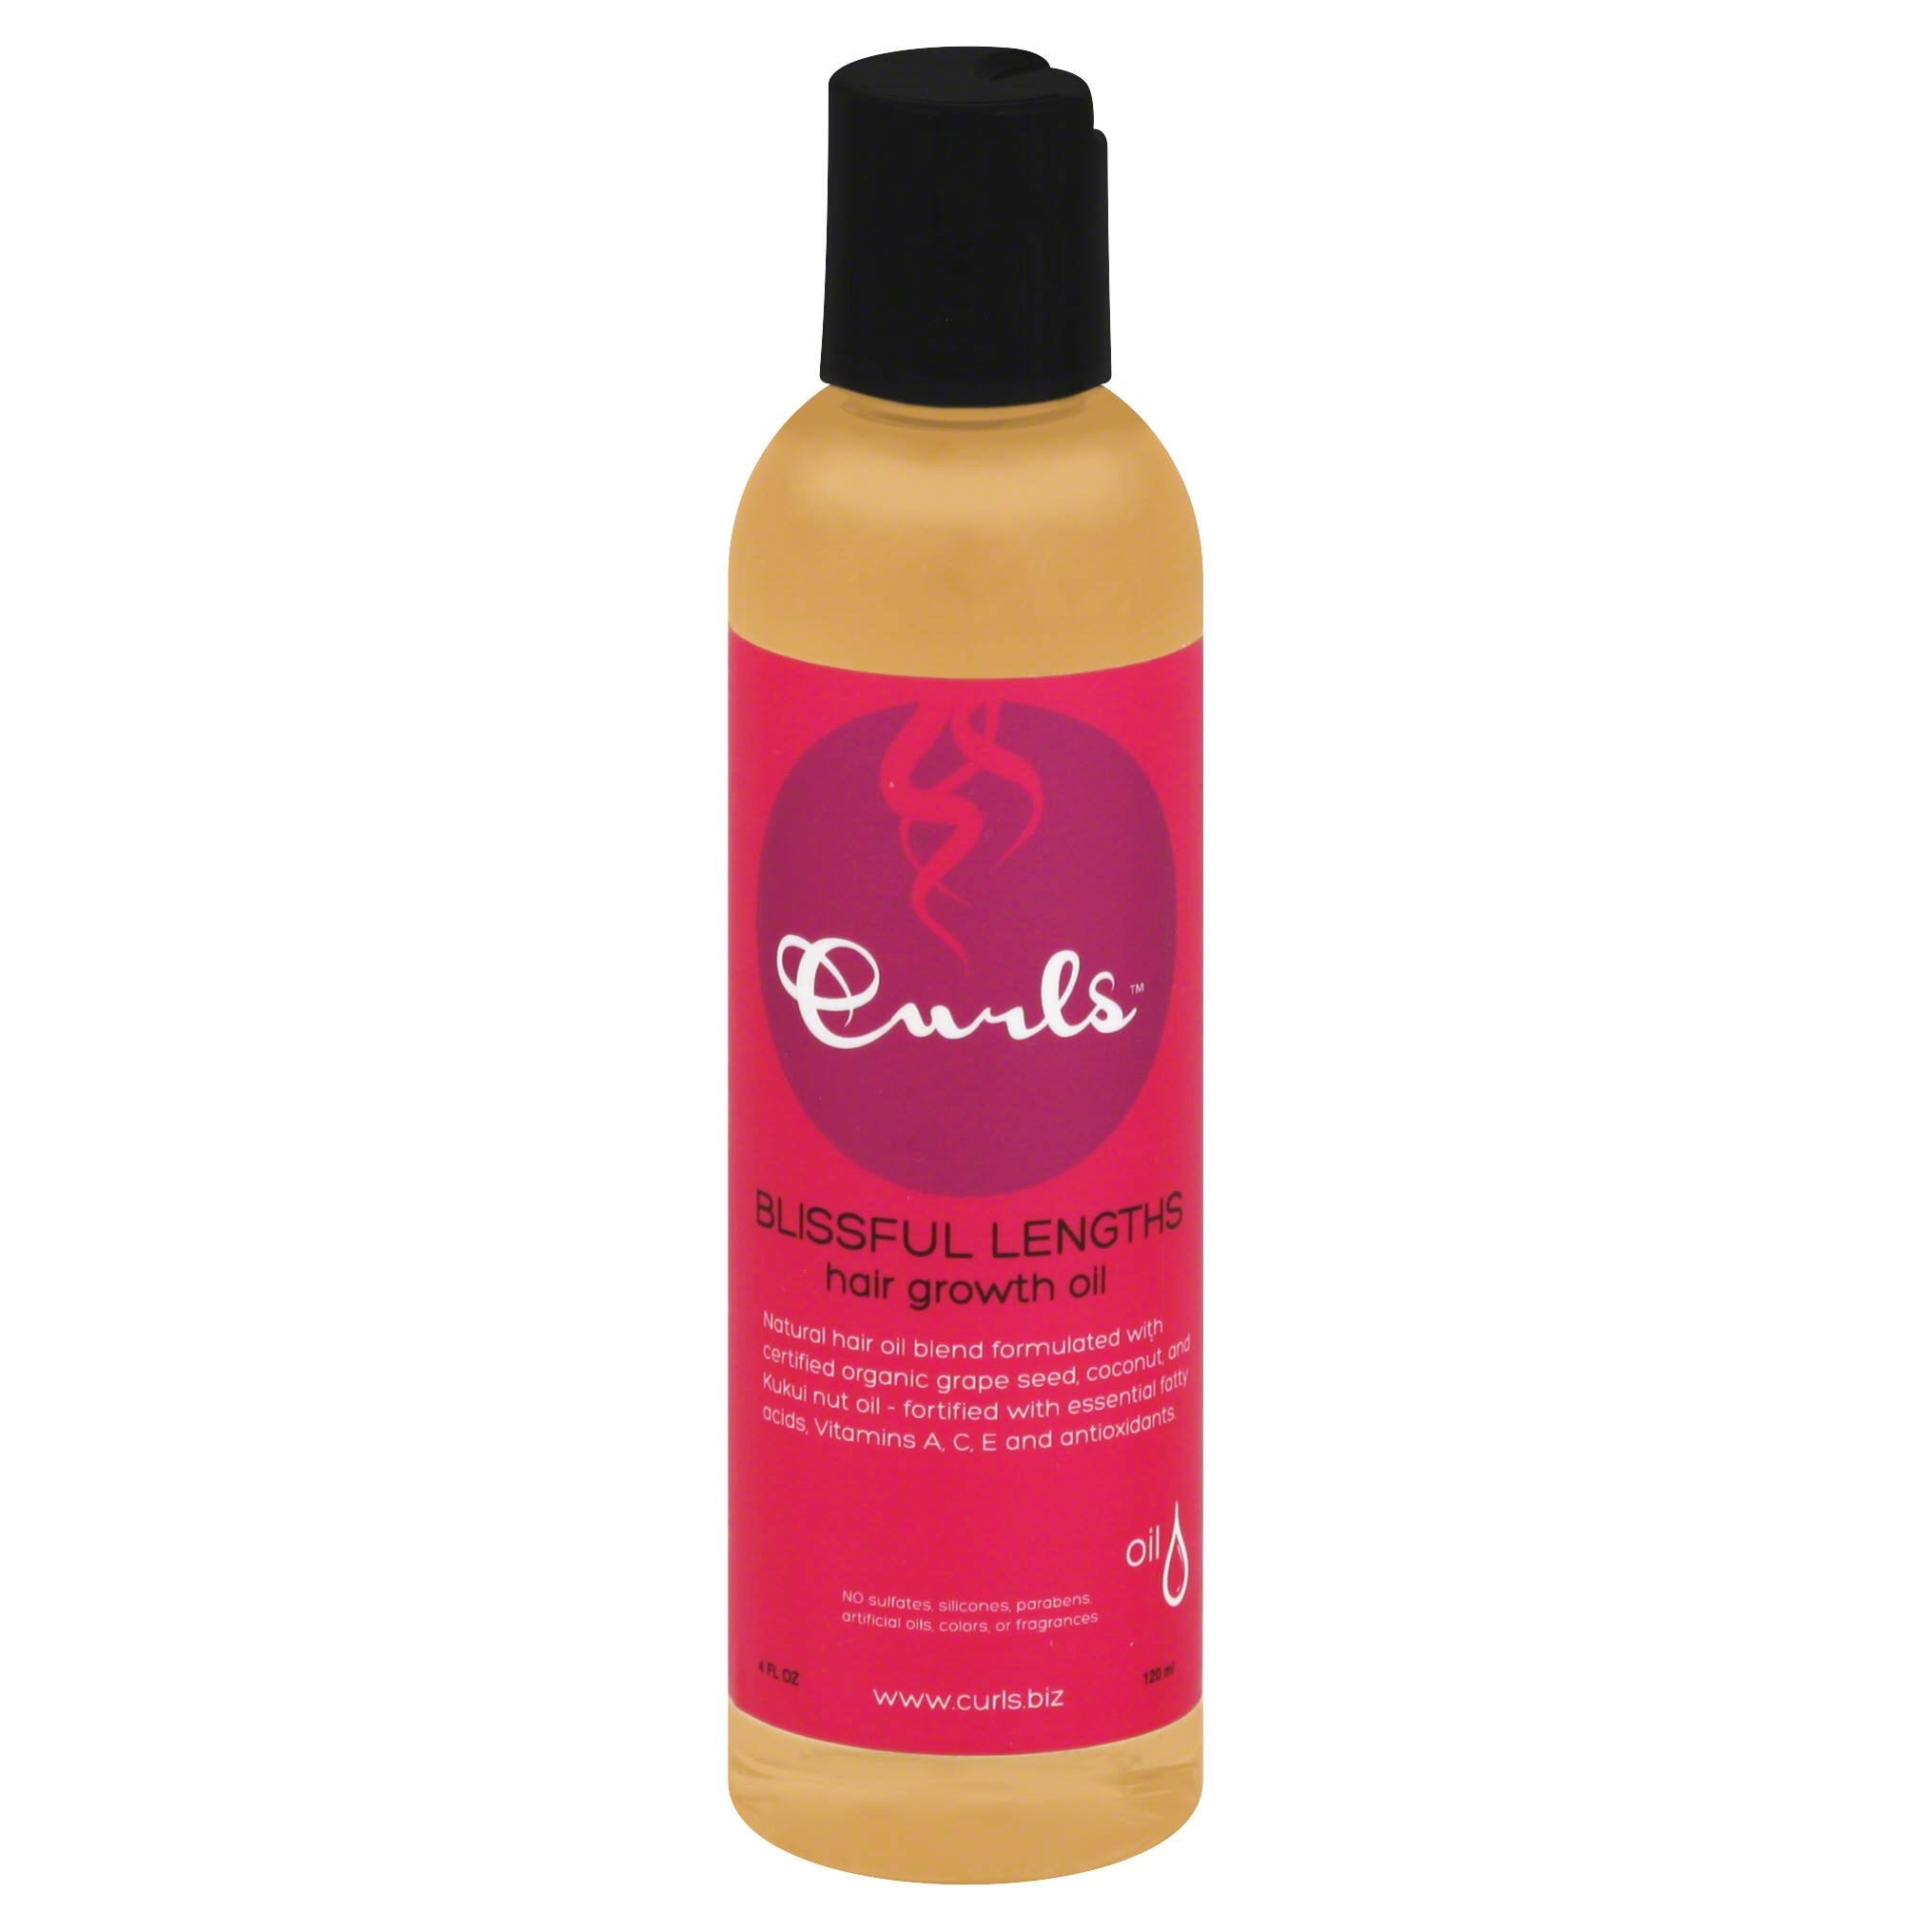 4th Ave Market: Curls Blissful Lengths Oil Elixir